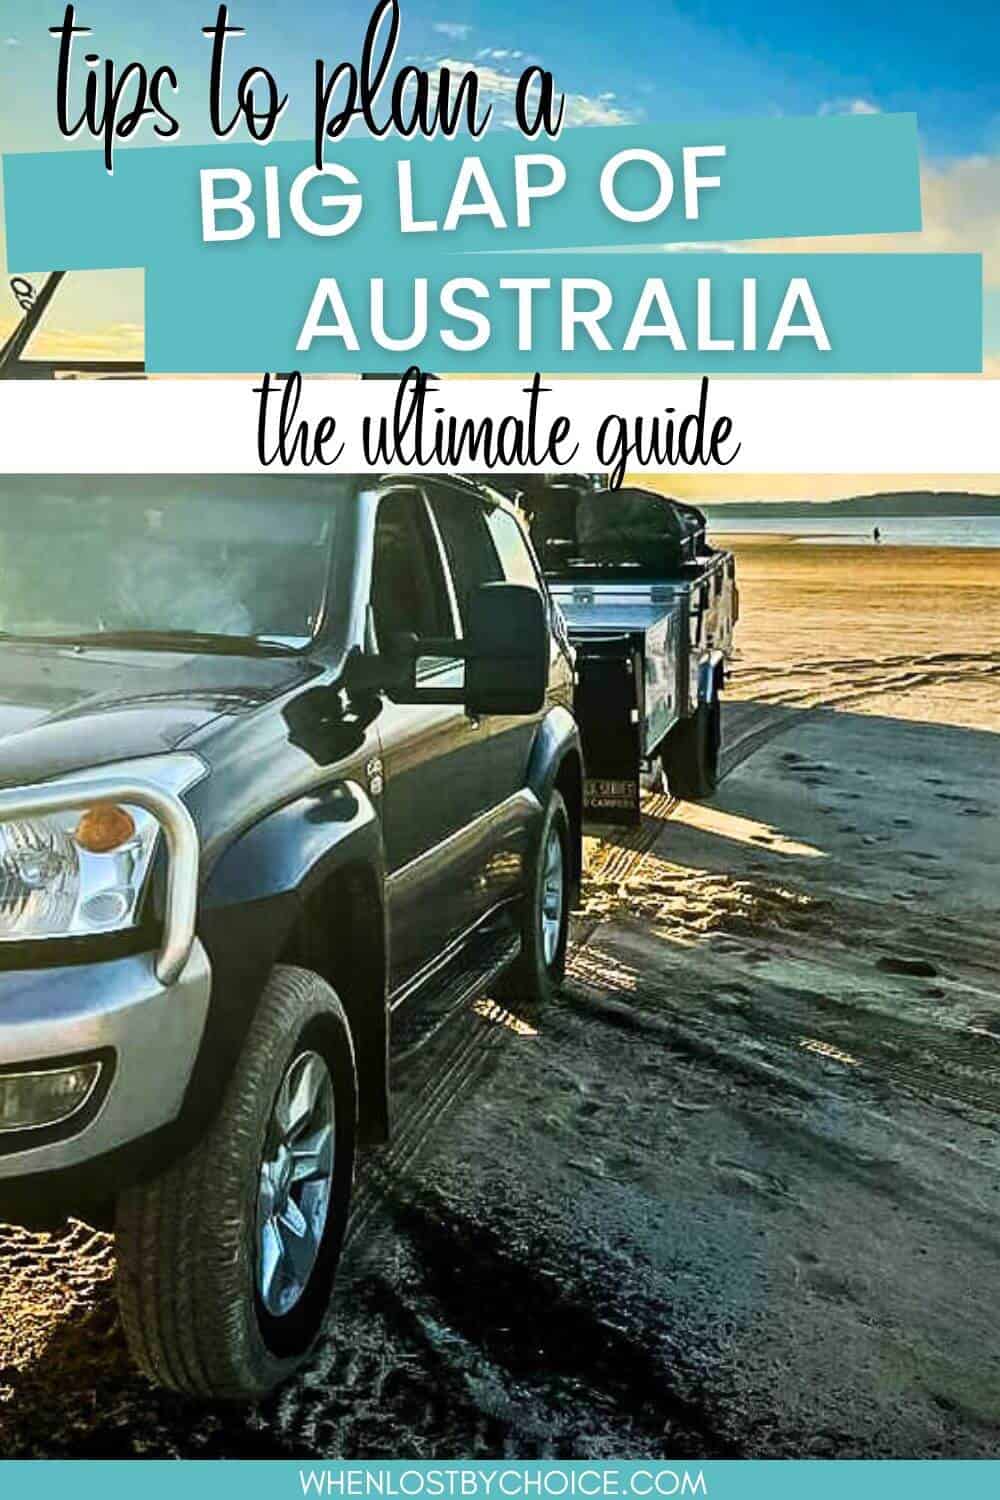 How to plan a big lap of australia: Planning a lap of Australia 